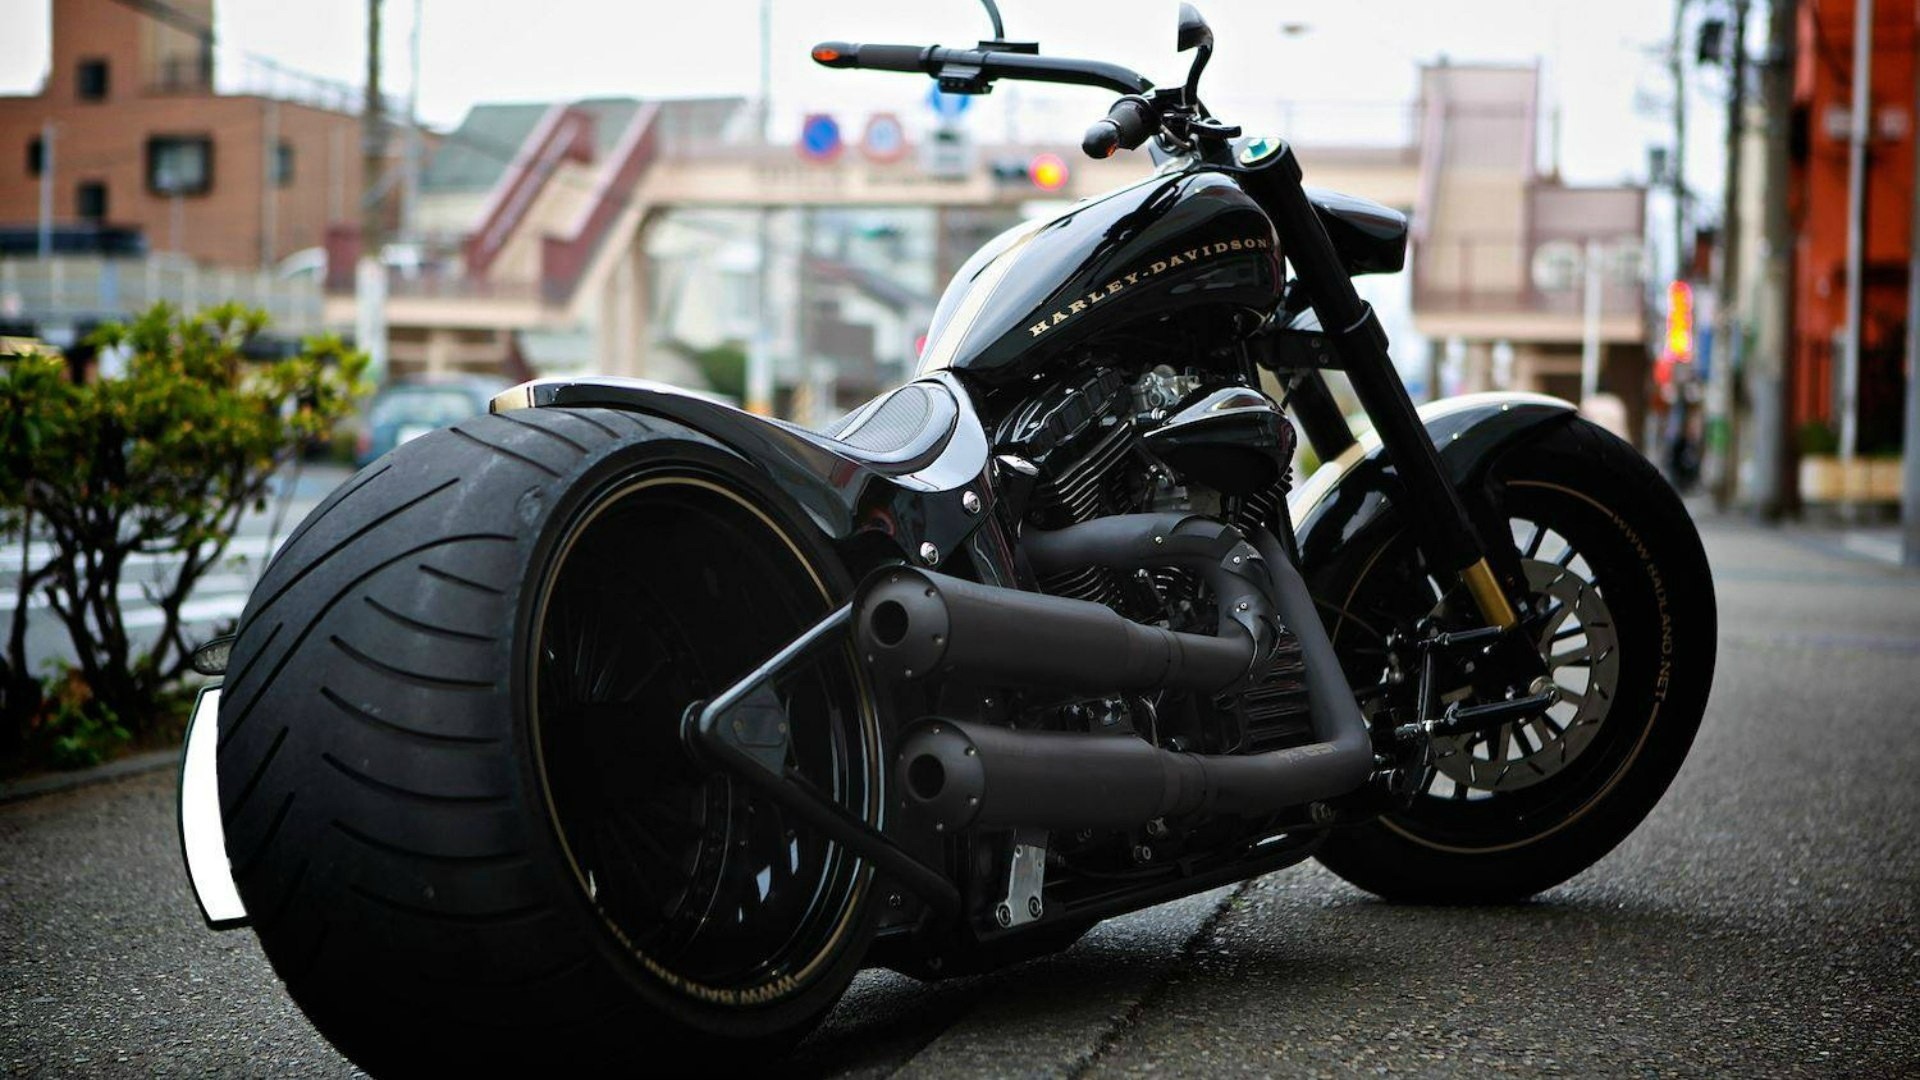 General 1920x1080 Harley-Davidson vehicle black motorcycles city American motorcycles motorcycle urban